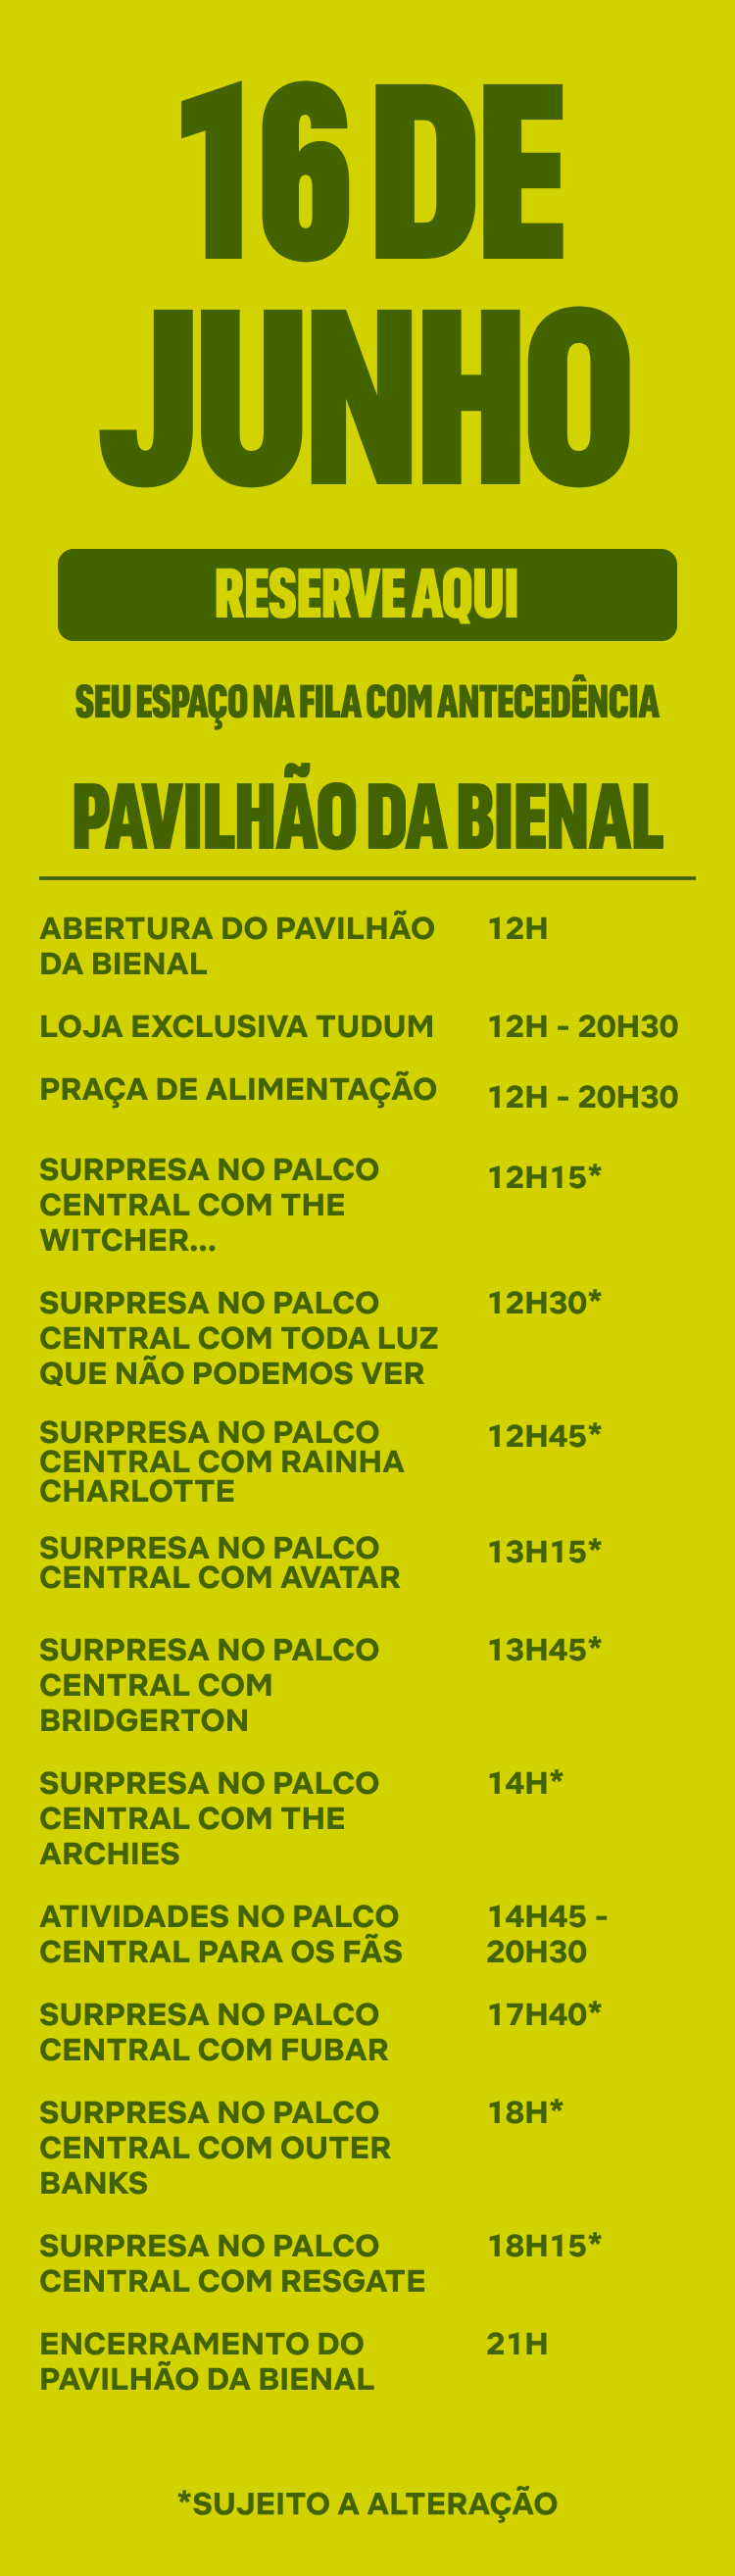 Netflix TUDUM ❤️🖤 in Brazil 🇧🇷 Day 1 ✓ @netflixbrasil